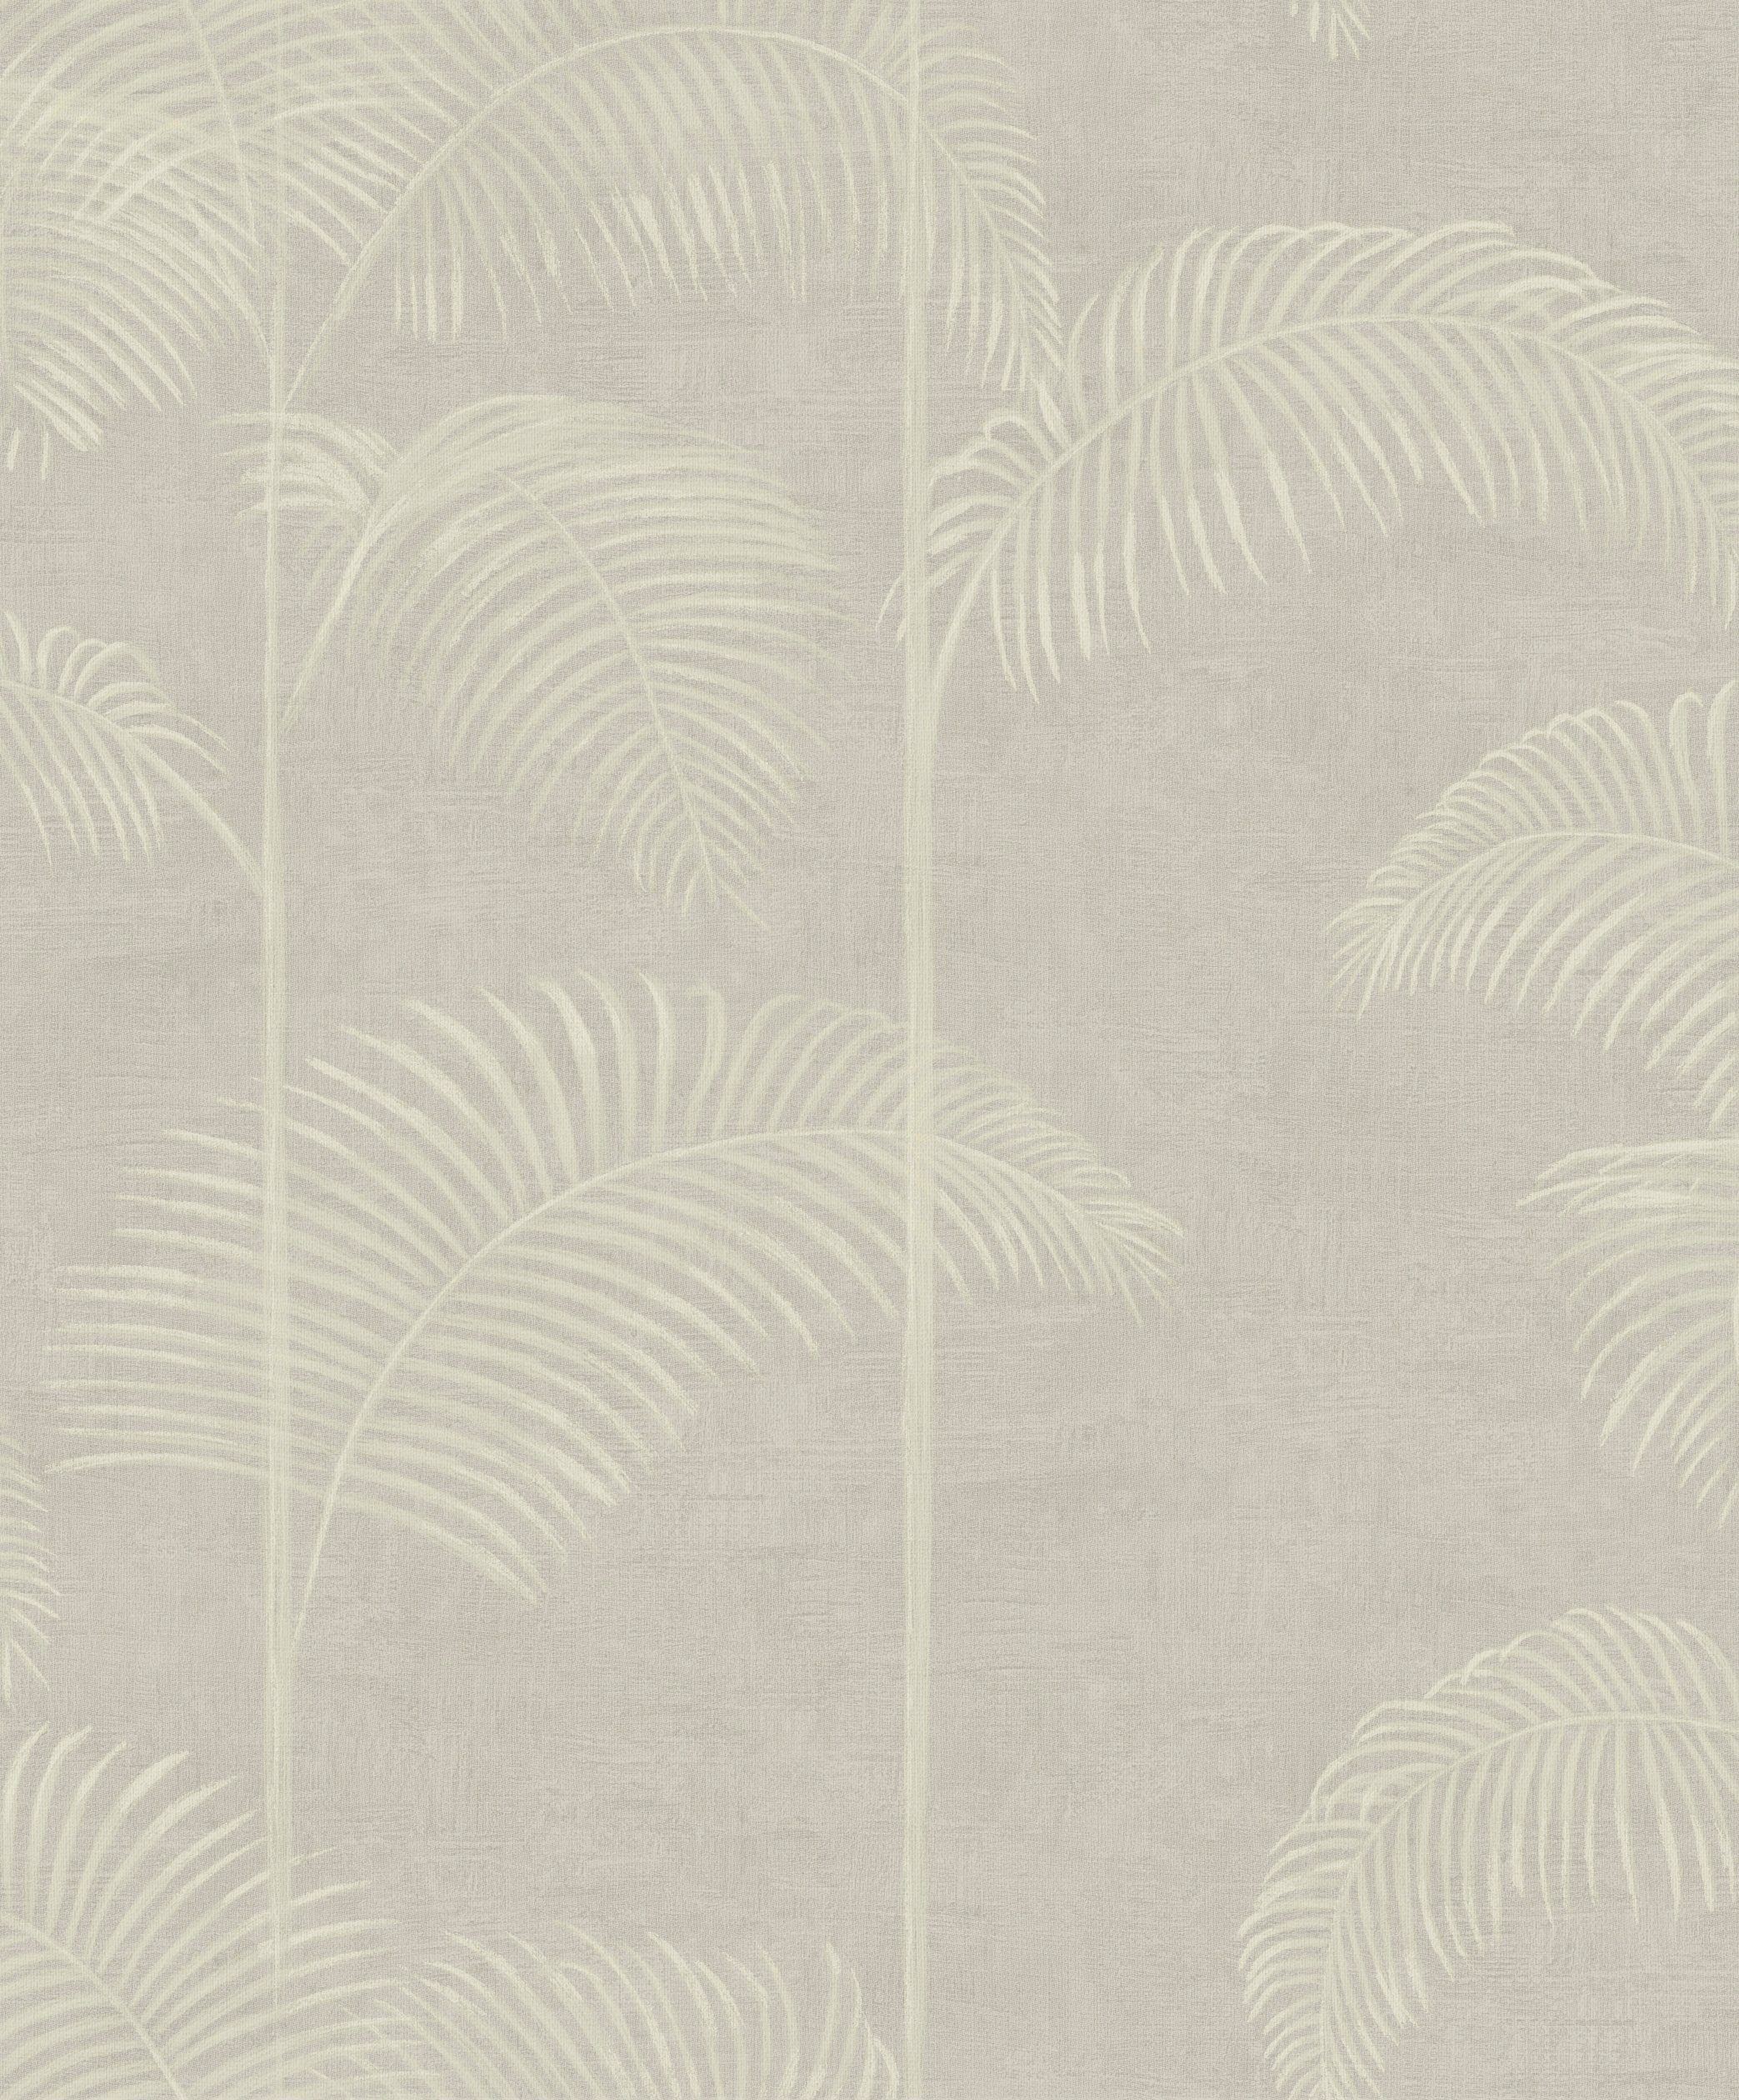 Palm Deluxe, LOOKS St), Wolfgang (1 Beige botanisch, by Joop texturiert, Vliestapete 10mx52cm